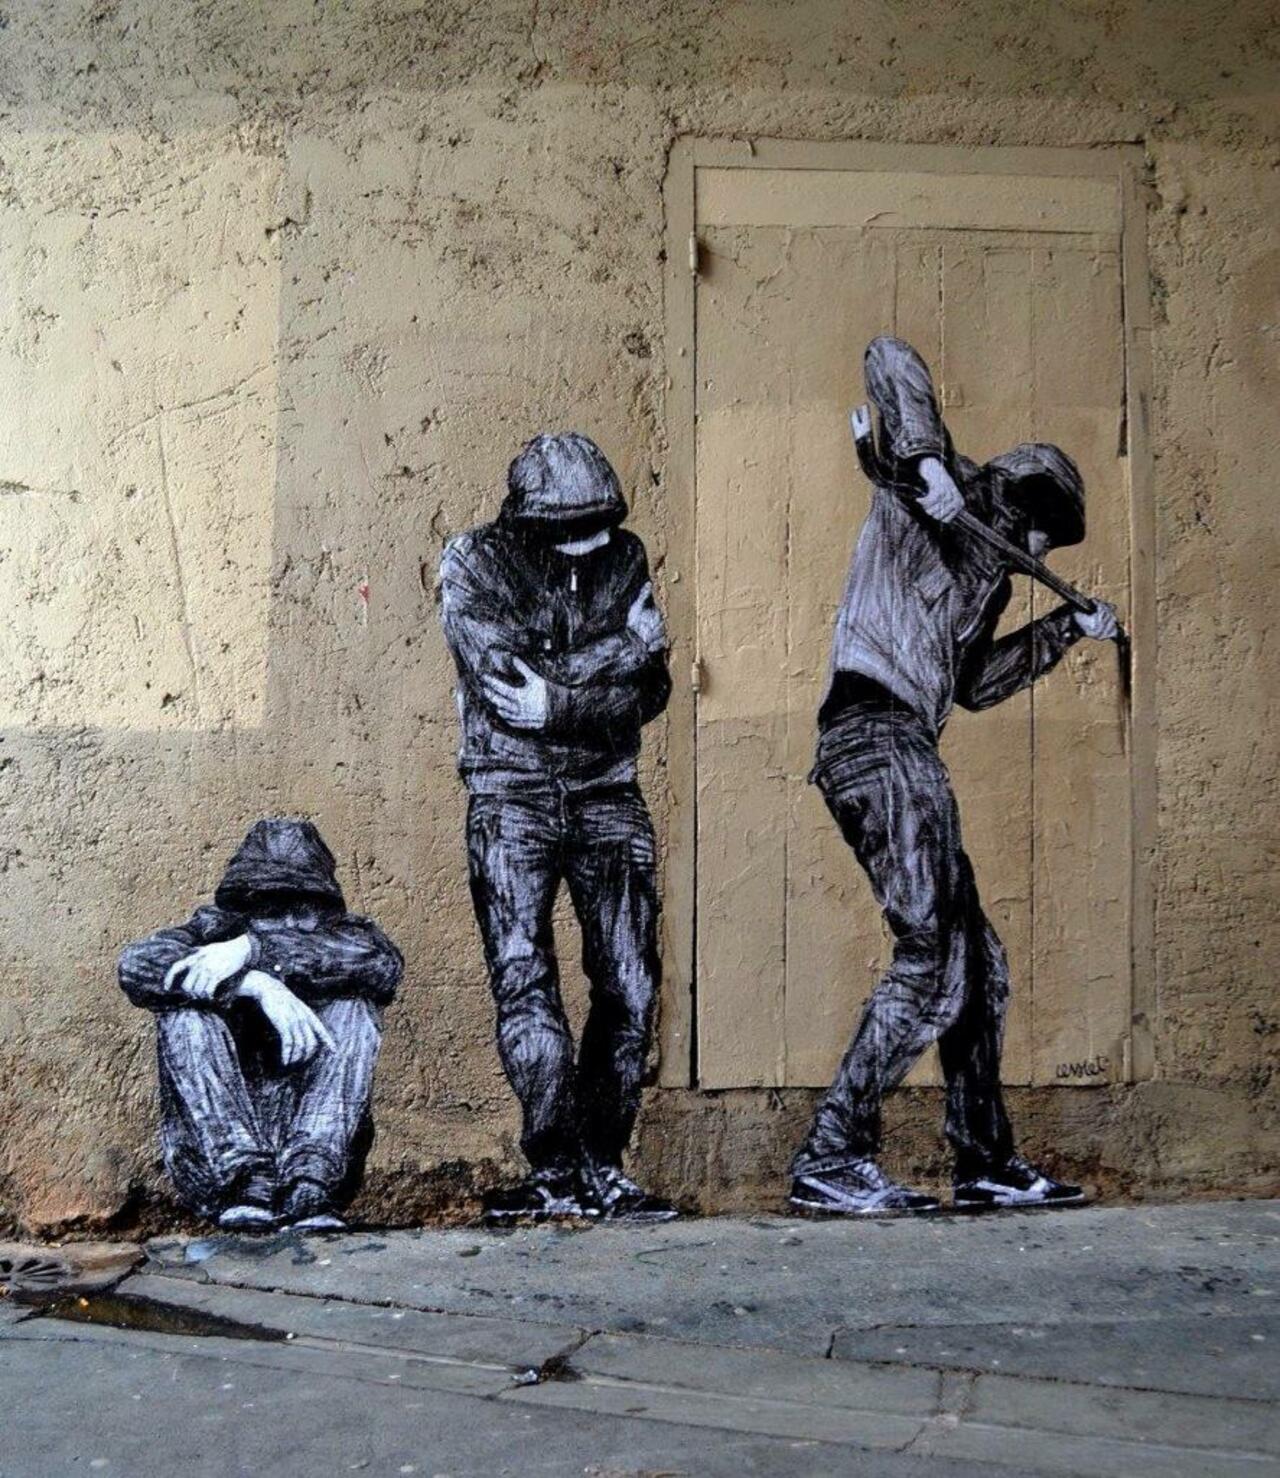 New Street Art by Levalet 
Portes ouvertes - Paris X

#art #arte #graffiti #streetart http://t.co/7Ew96g3fVH